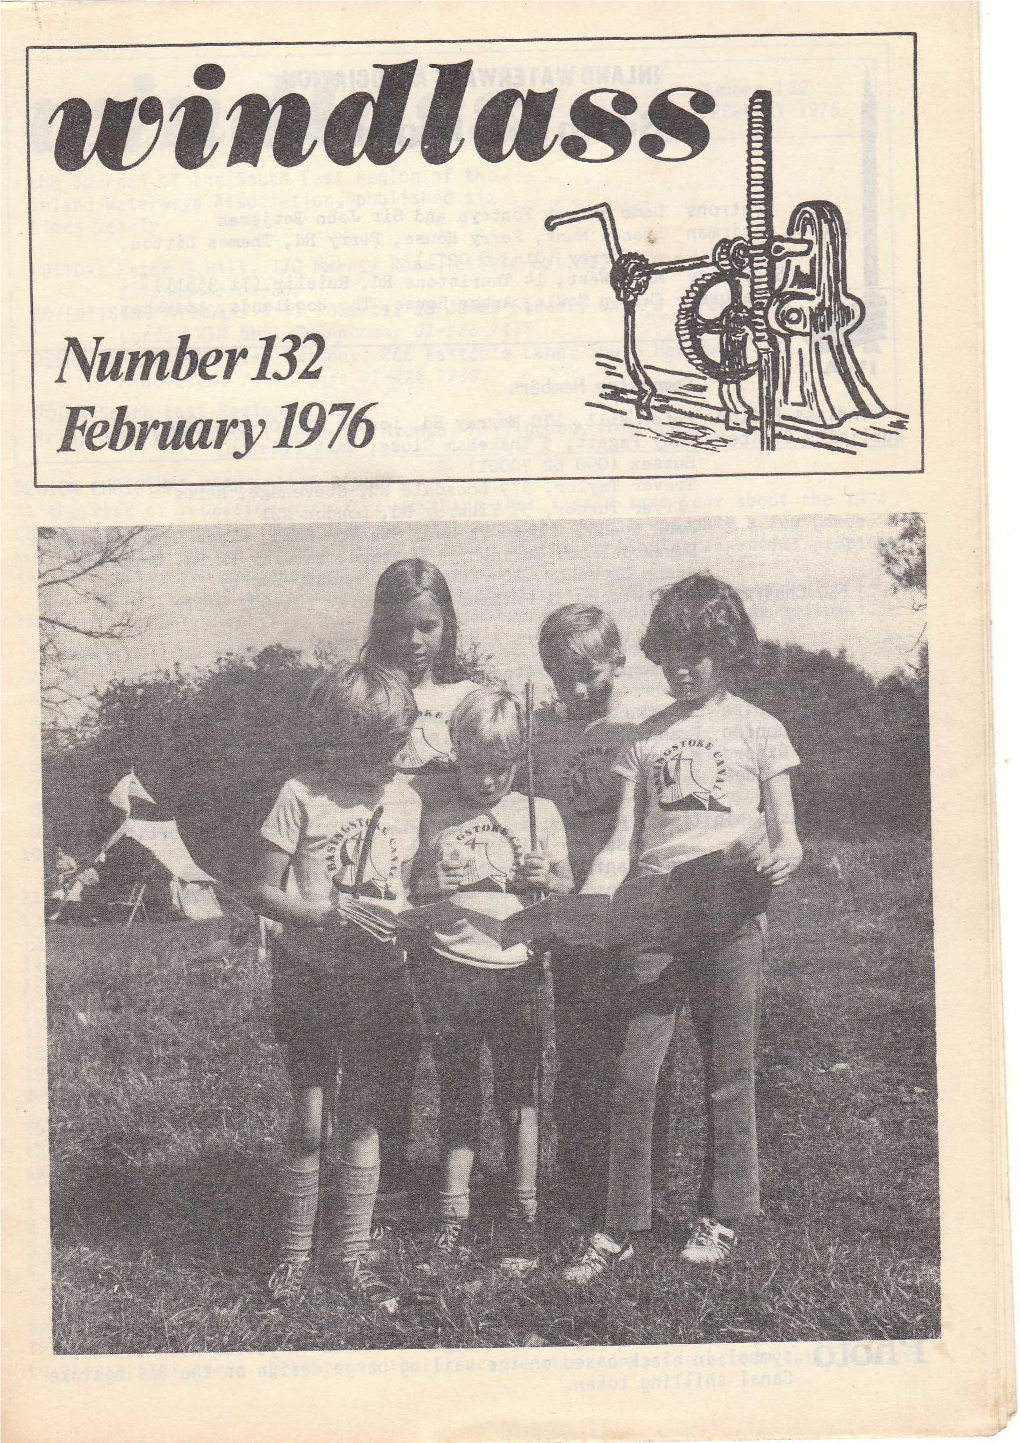 Windlass No. 131 December 1975